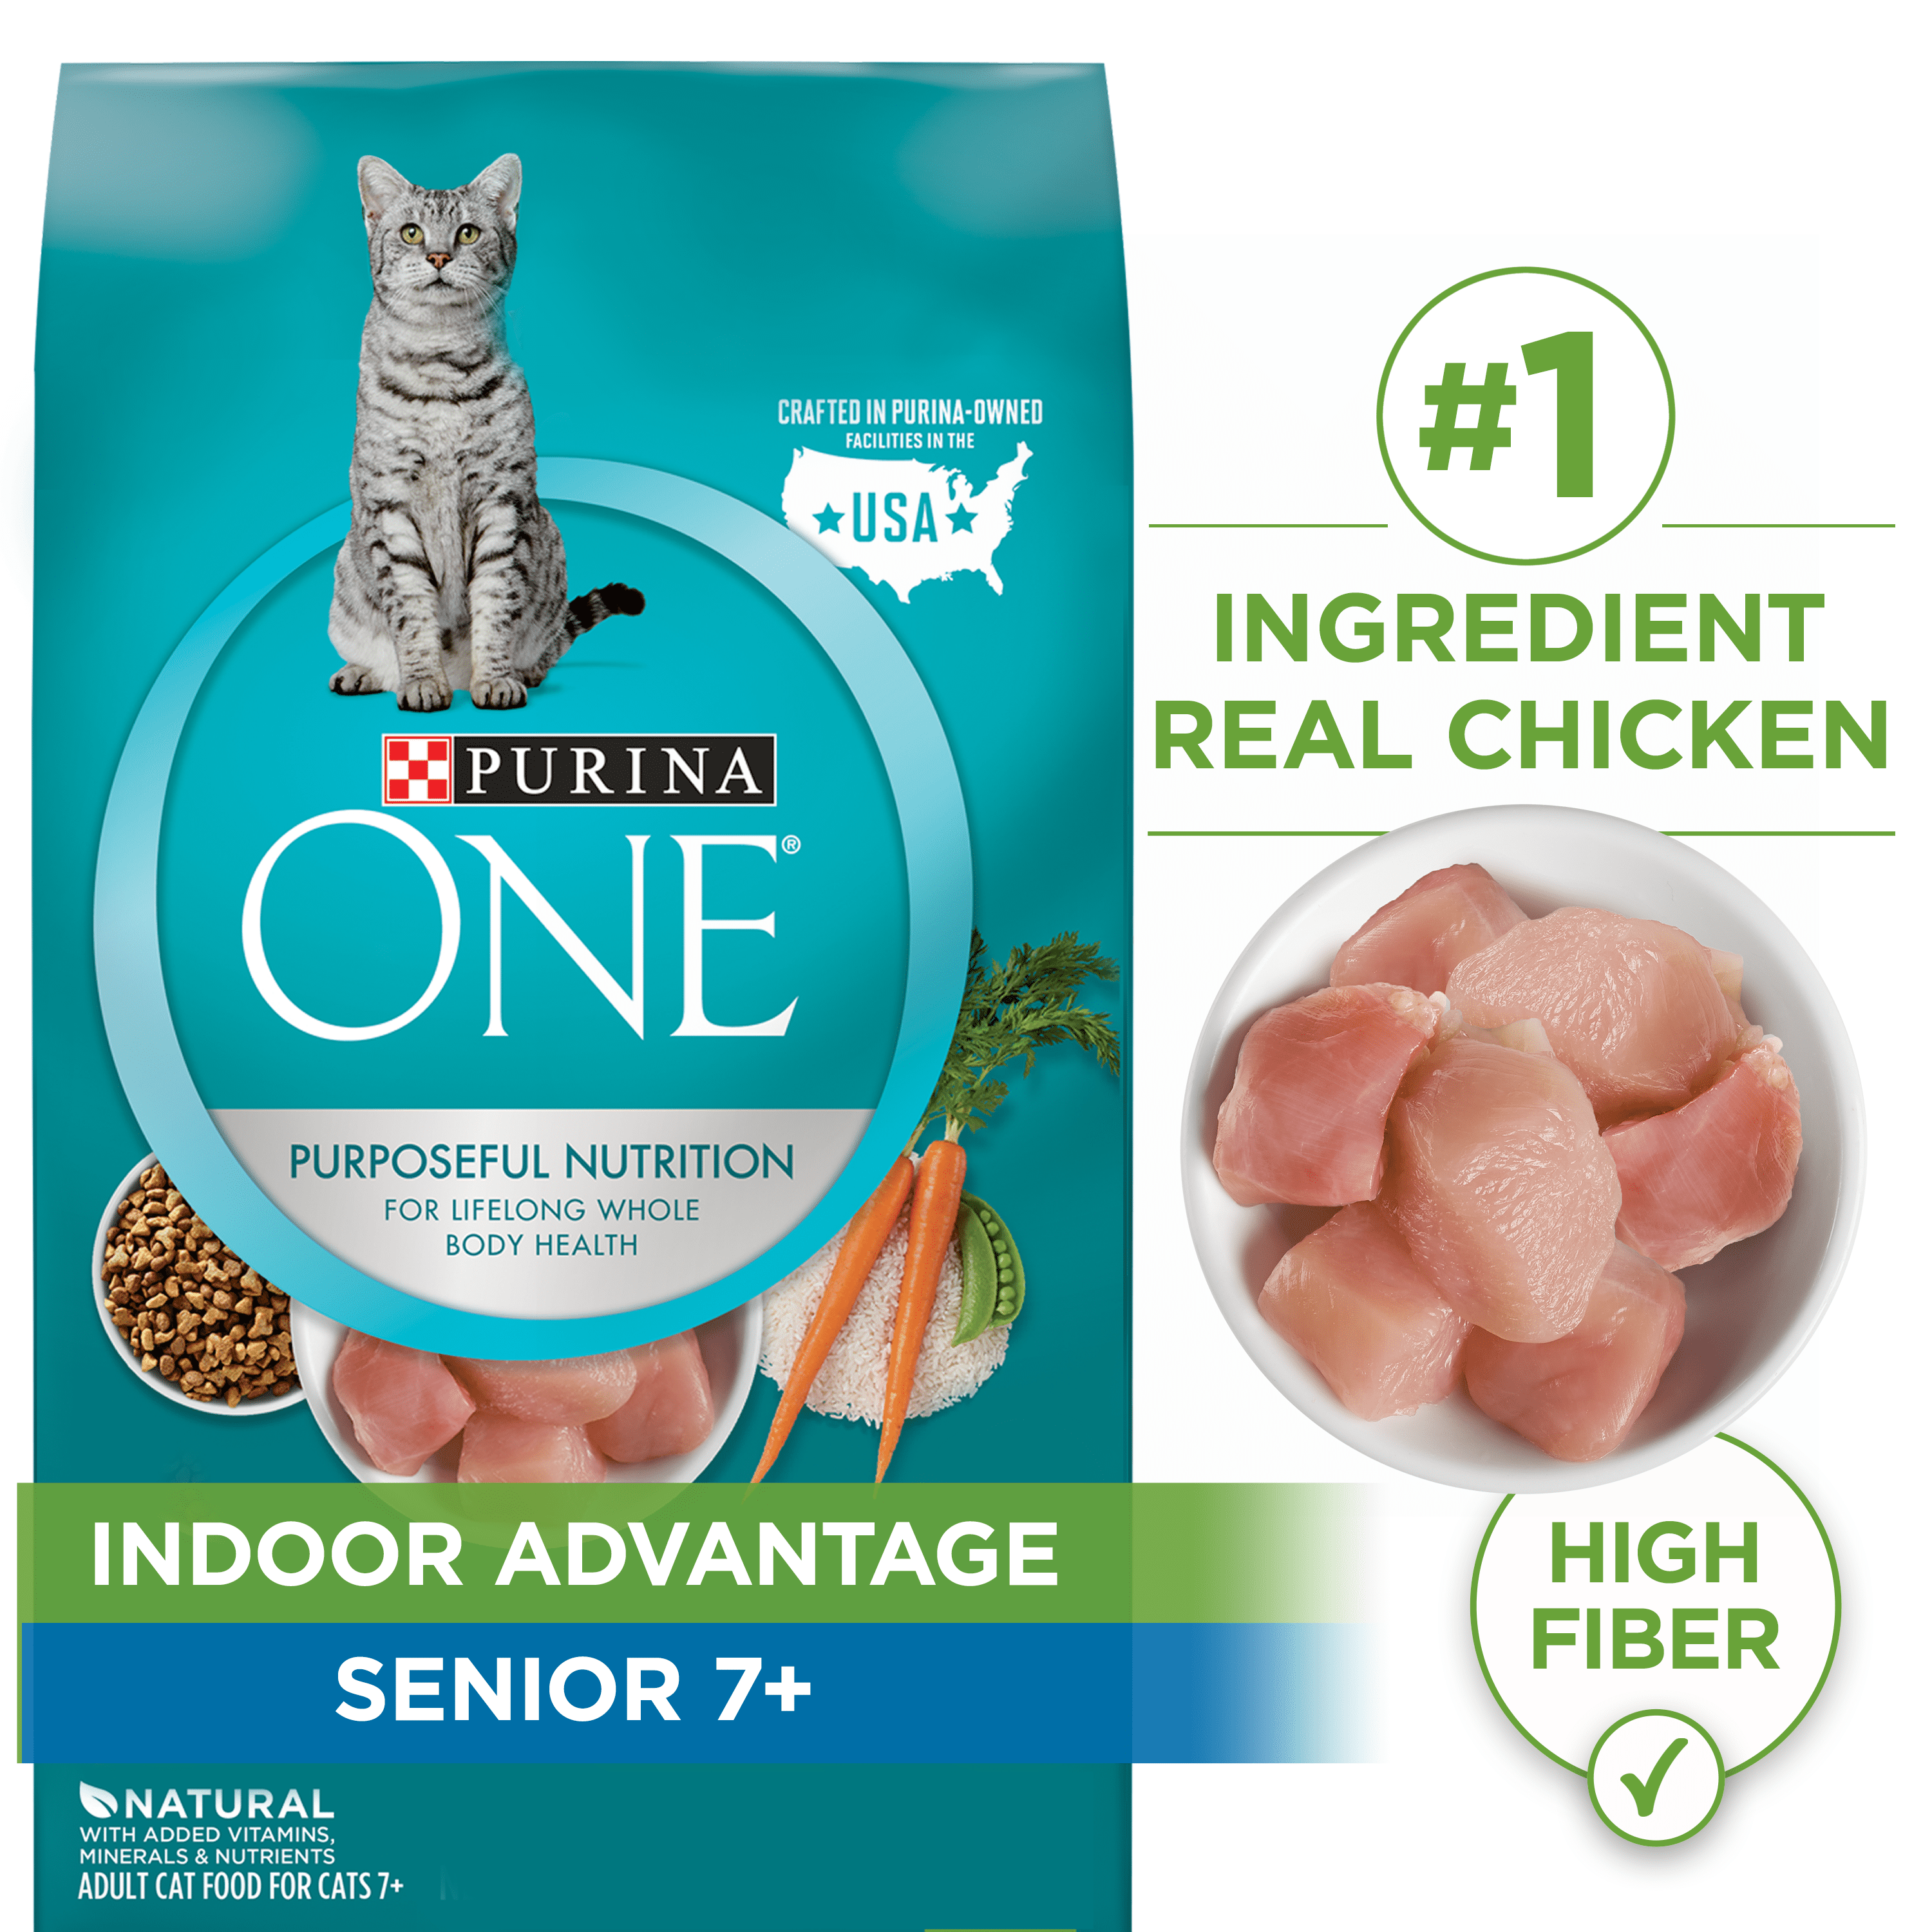 High Fiber Cat Food / Purina One Healthy Kitten Dry Cat Food Purina